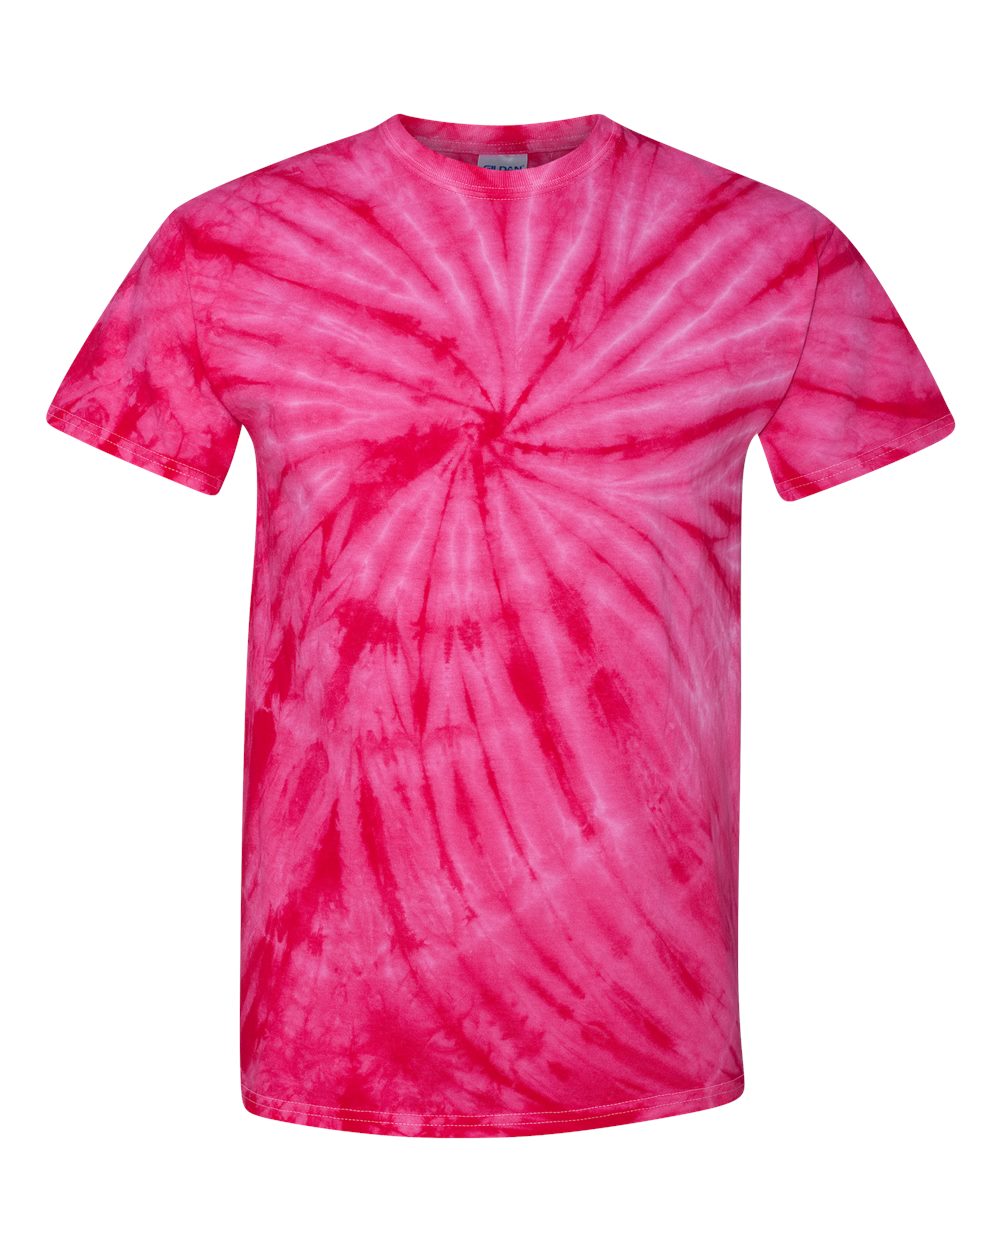 Pinky Bullseye Tie Dye Unisex T-shirt 